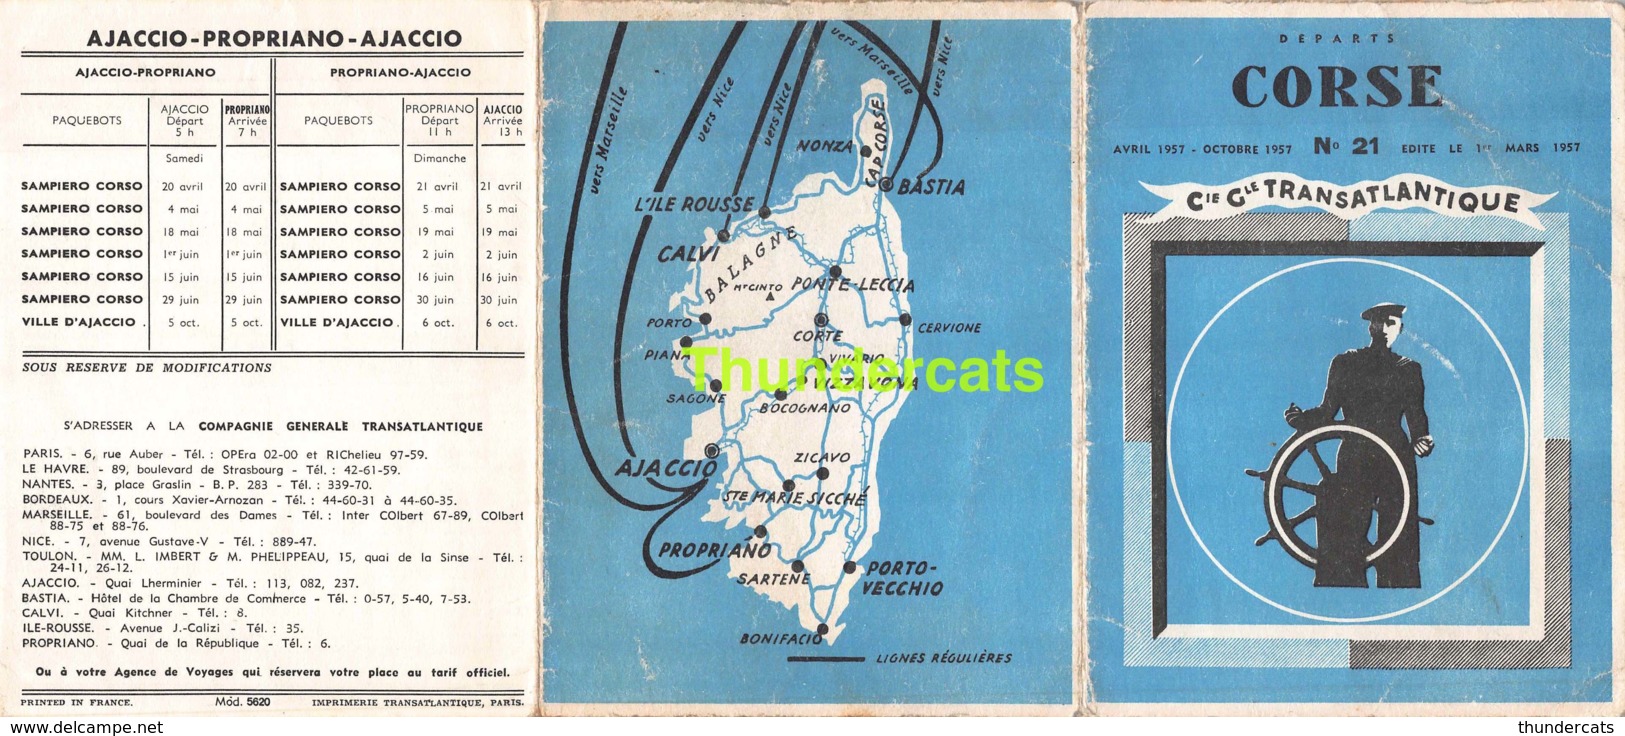 DEPLIANT BROHURE DEPARTS CORSE AVRIL 1957 OCTOBRE 1957 COMPAGNIE TRANSATLANTIQUE - Europa